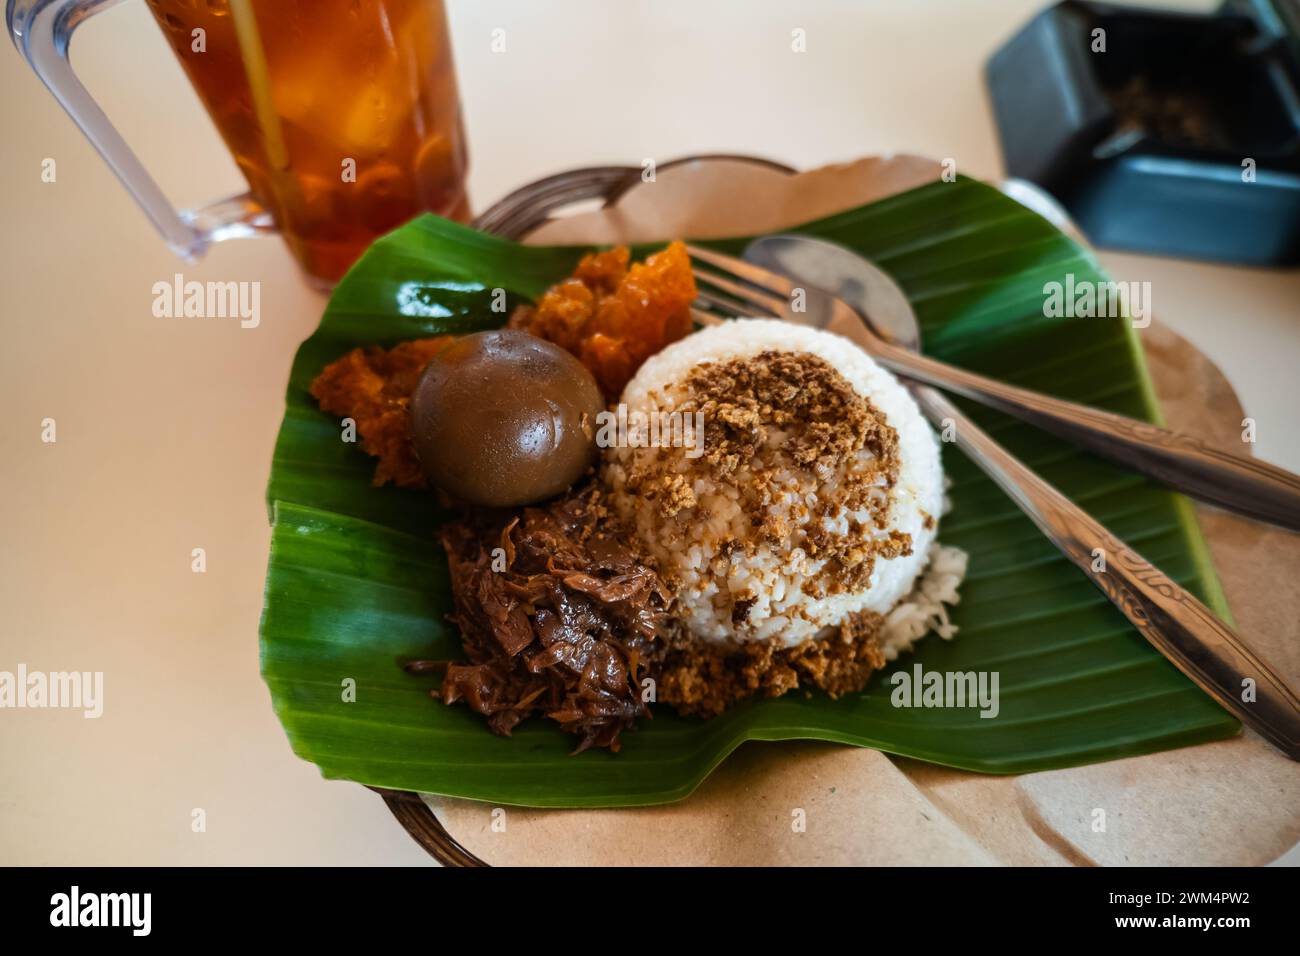 Gudeg, a famous dish from Yogjakarta, Indonesia at street food restaurant Stock Photo